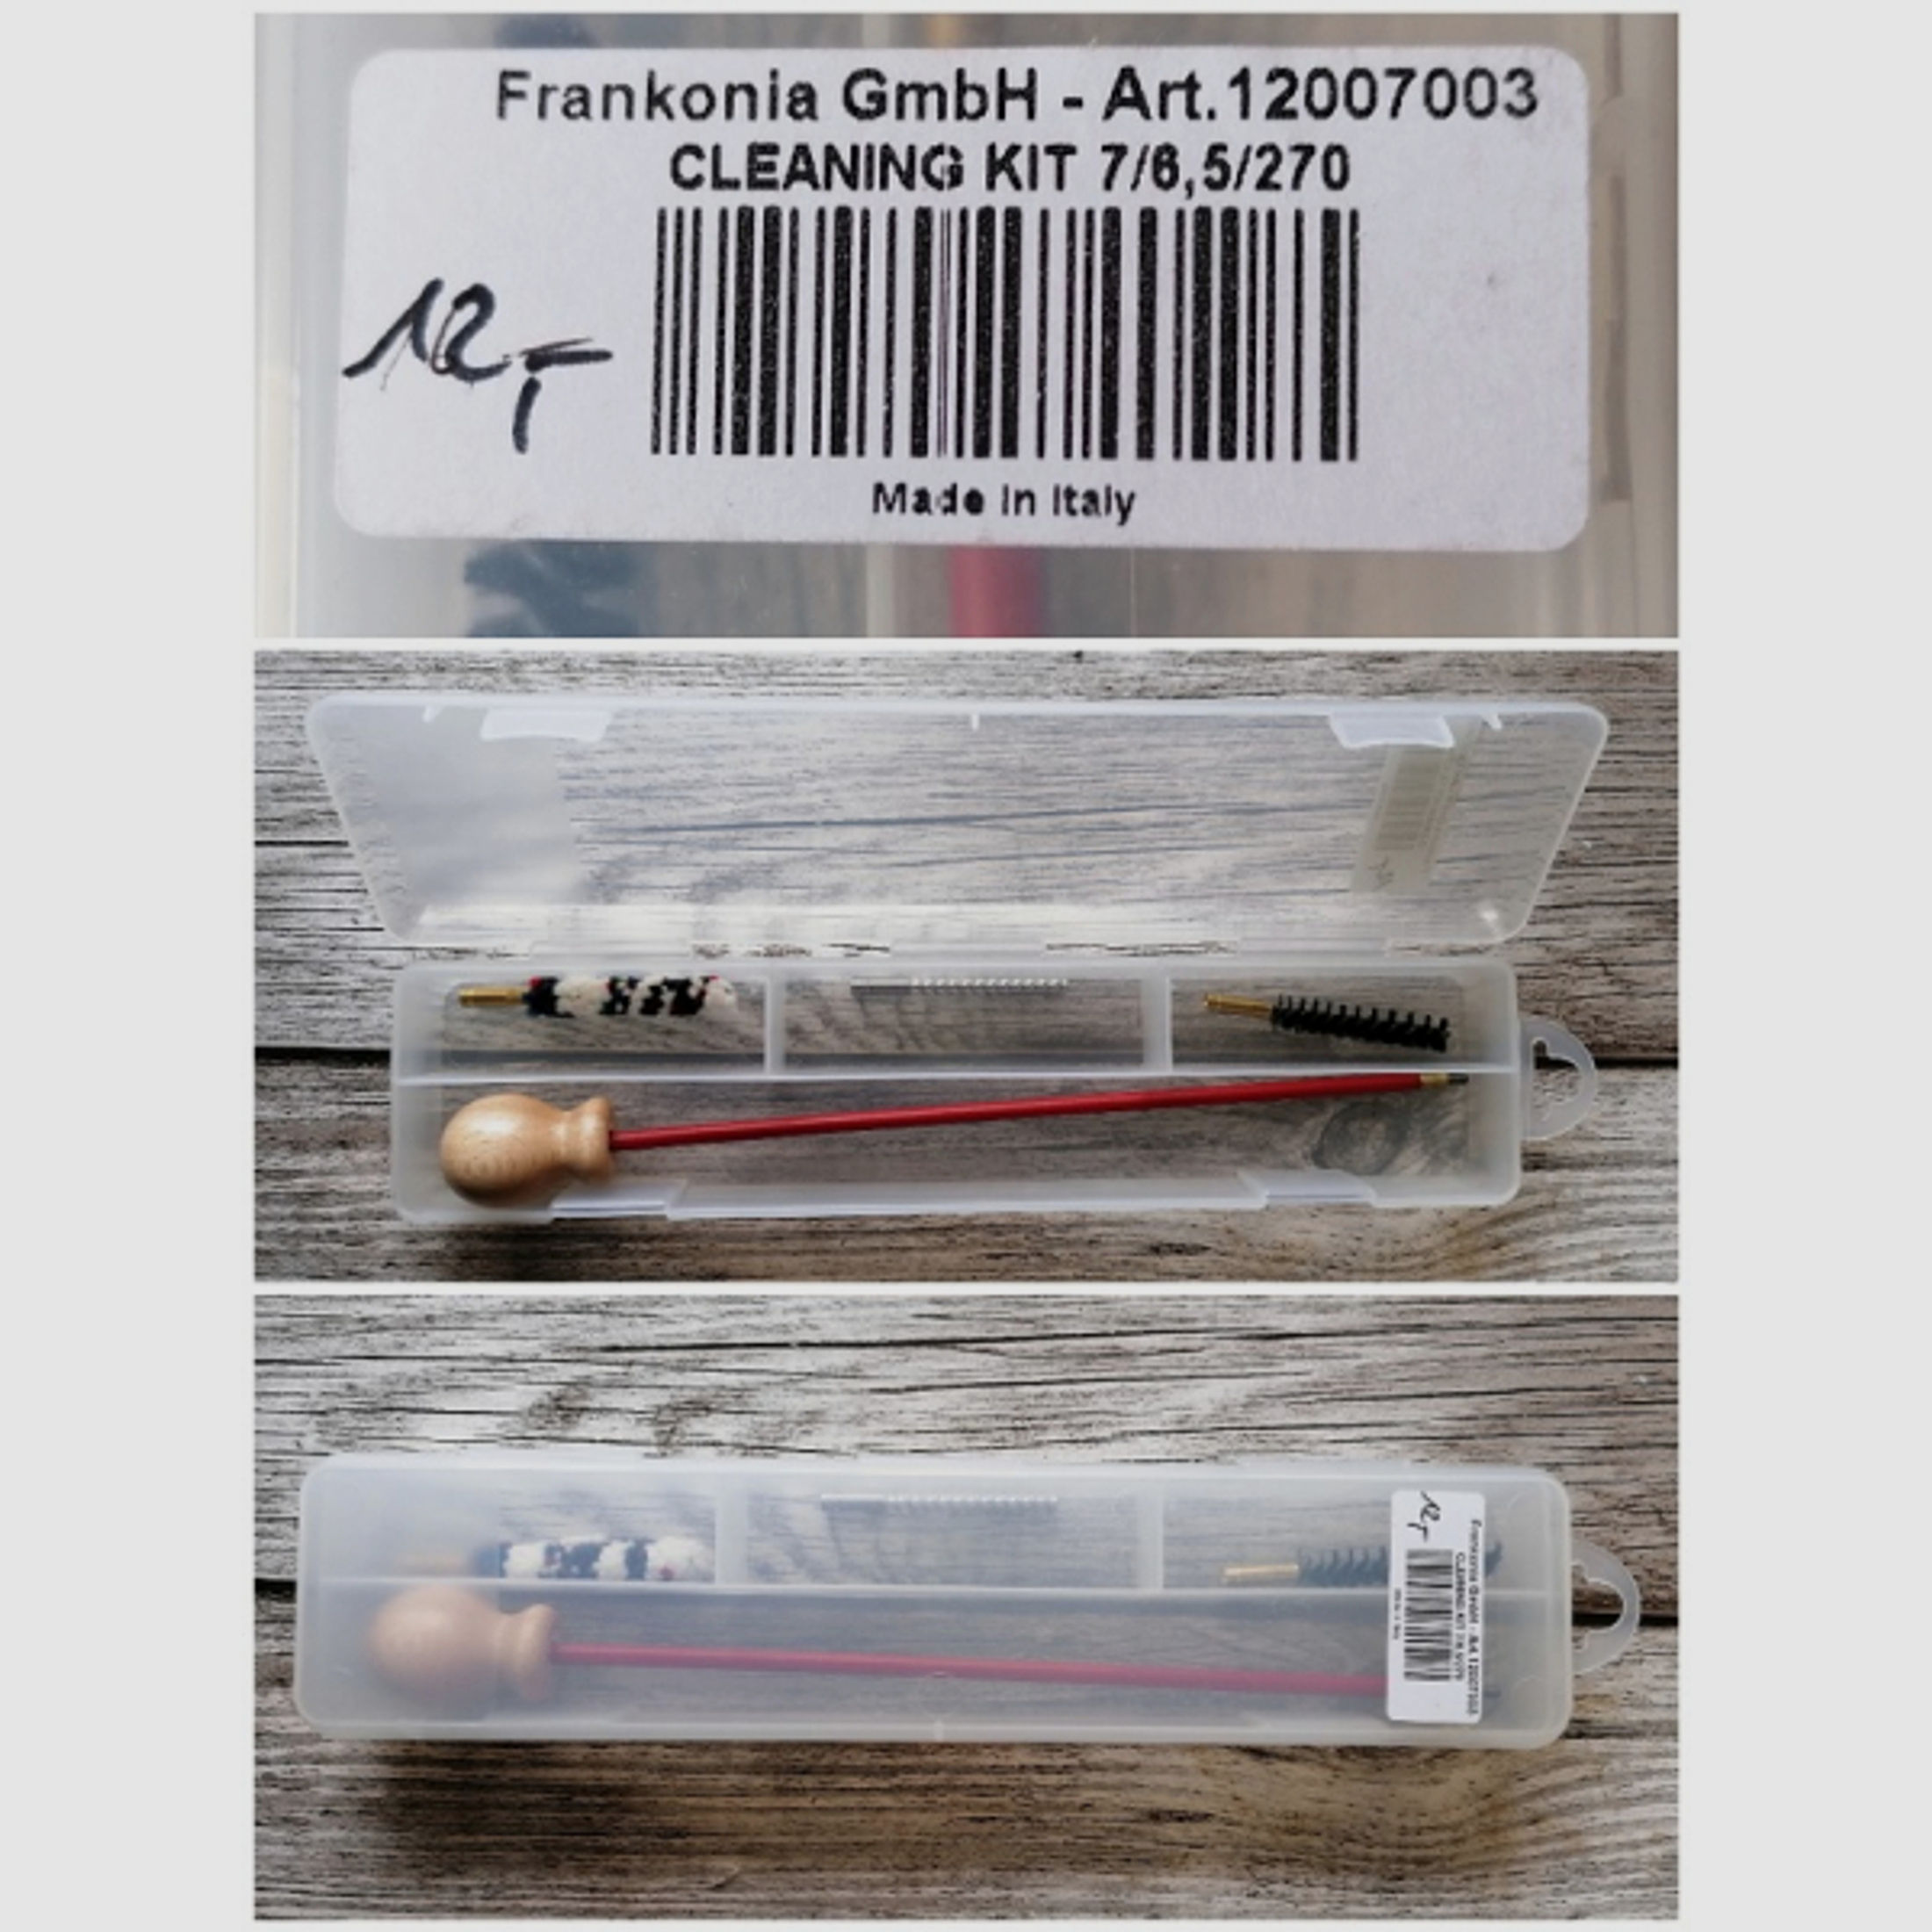 NEU: Frankonia Cleaning Kit / Reinigungsgarnitur im Kaliber 7mm / 6,5 / .270 - NICHT KOMPLETT -